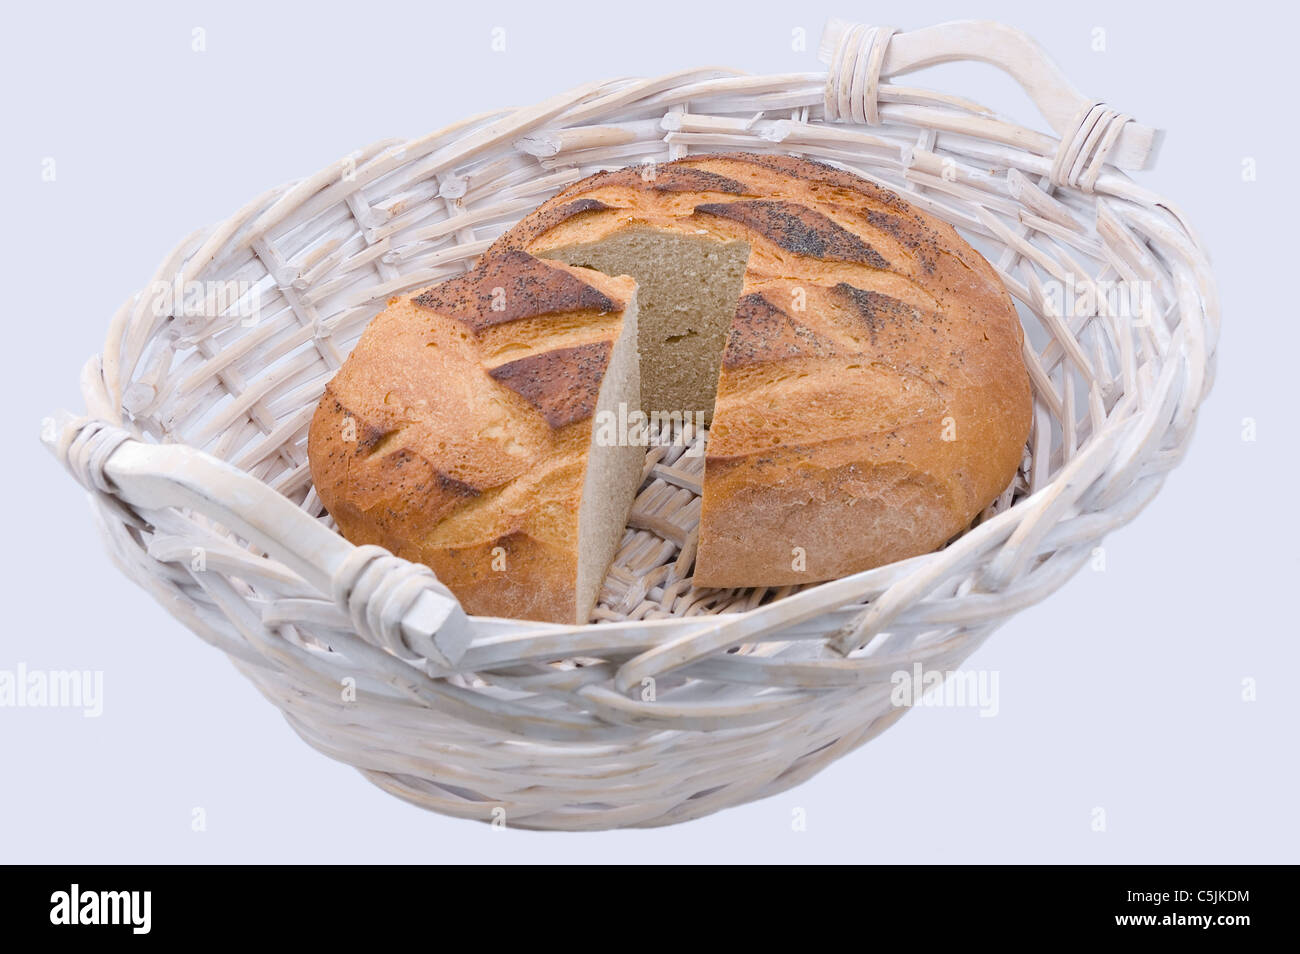 Cut round loaf of bread in wicker basket Stock Photo